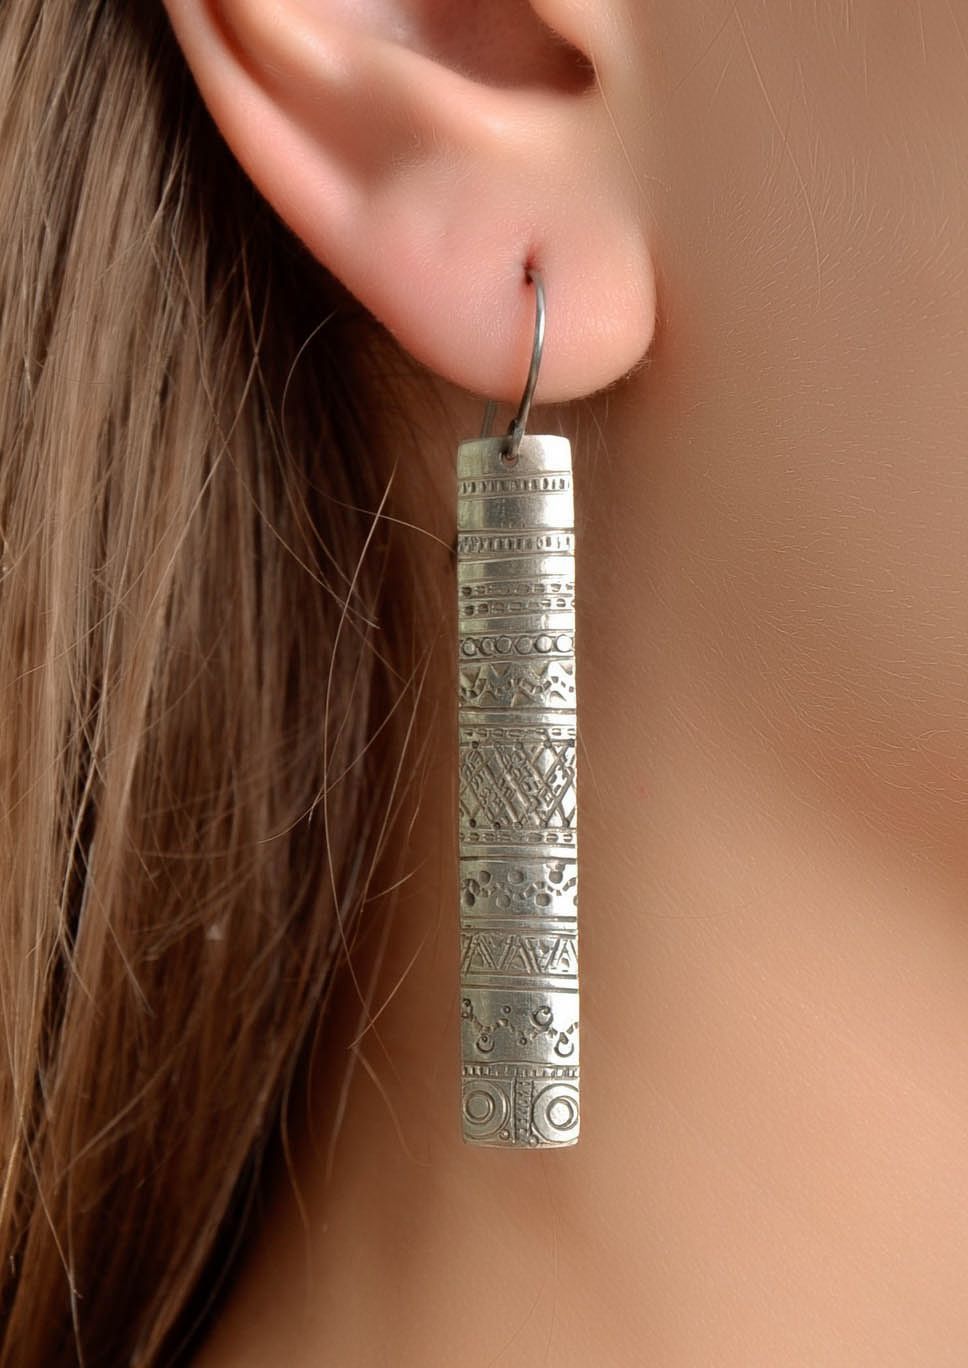 Stamped earrings photo 4